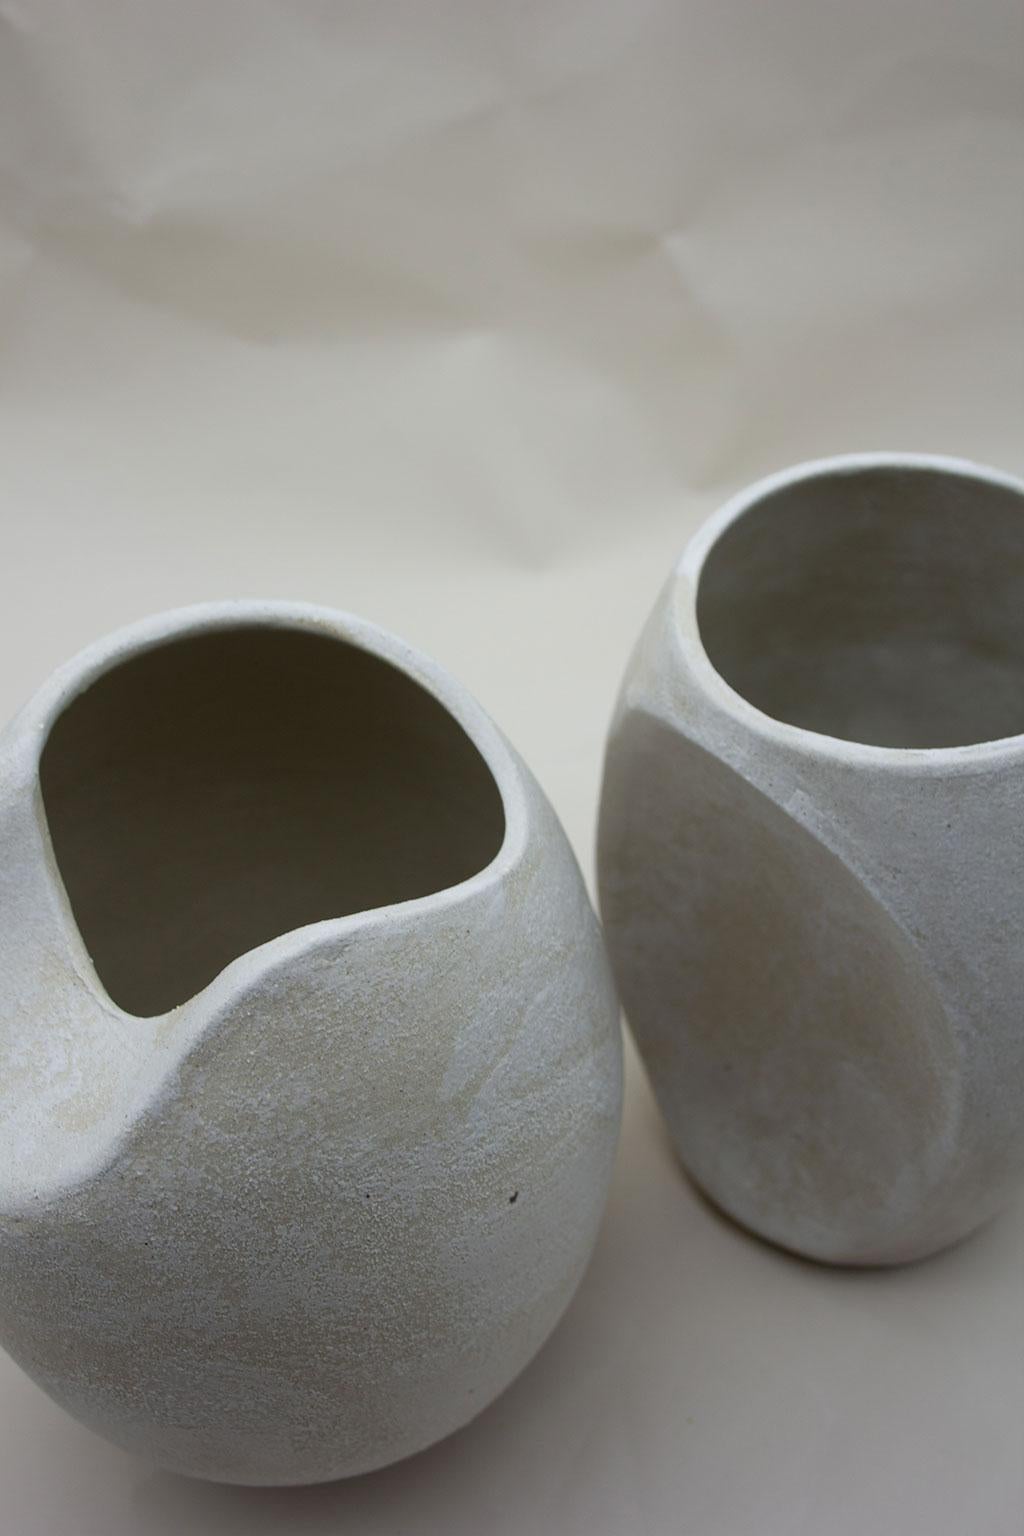 Contemporary Sliced Sphere with Half Sliced Form Ceramic Sculpture in Warm Beige Stoneware